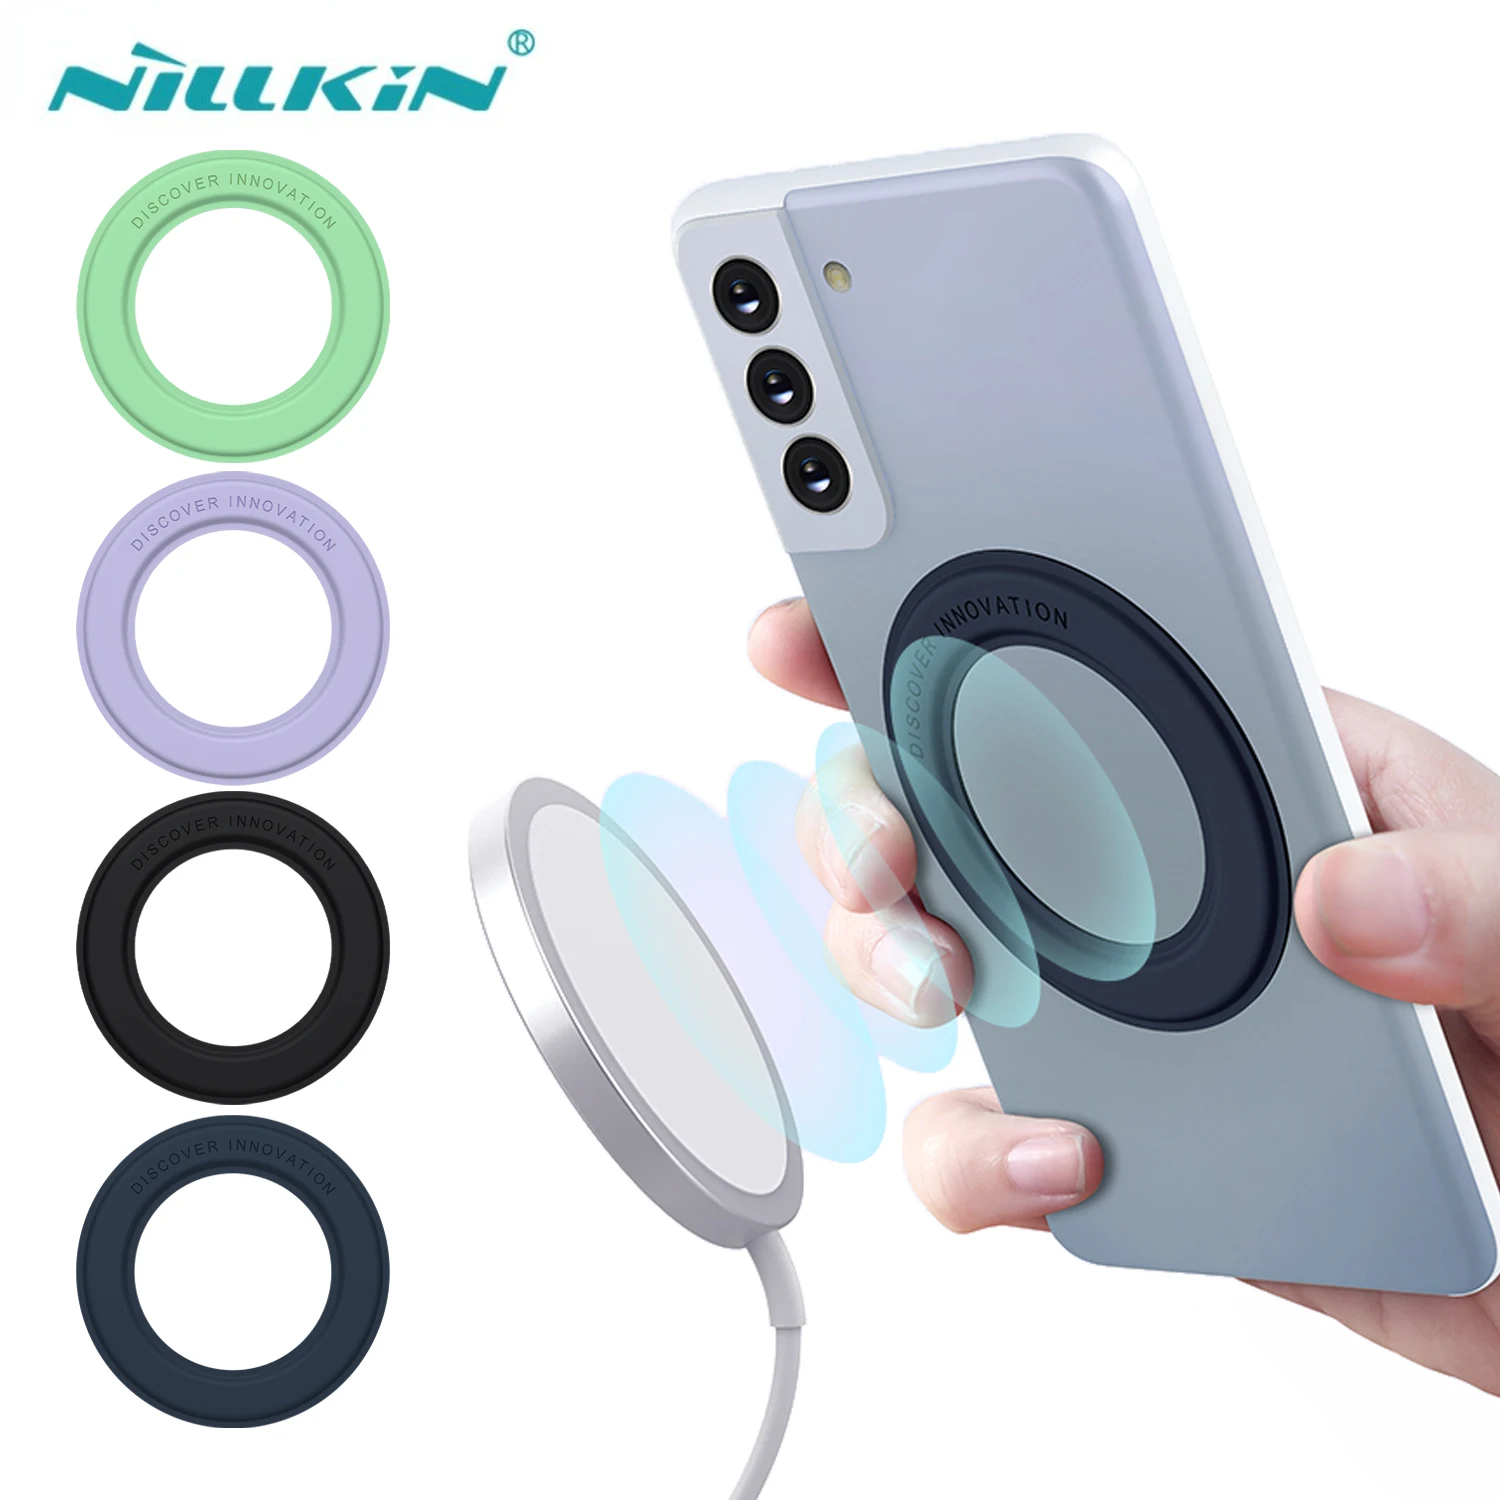 Nillkin-Soporte de anillo magnético para iPhone 13, 12 Pro Max, soporte fijo de pegatina SnapHold para Samsung S21 Series, soporte de montaje magnético